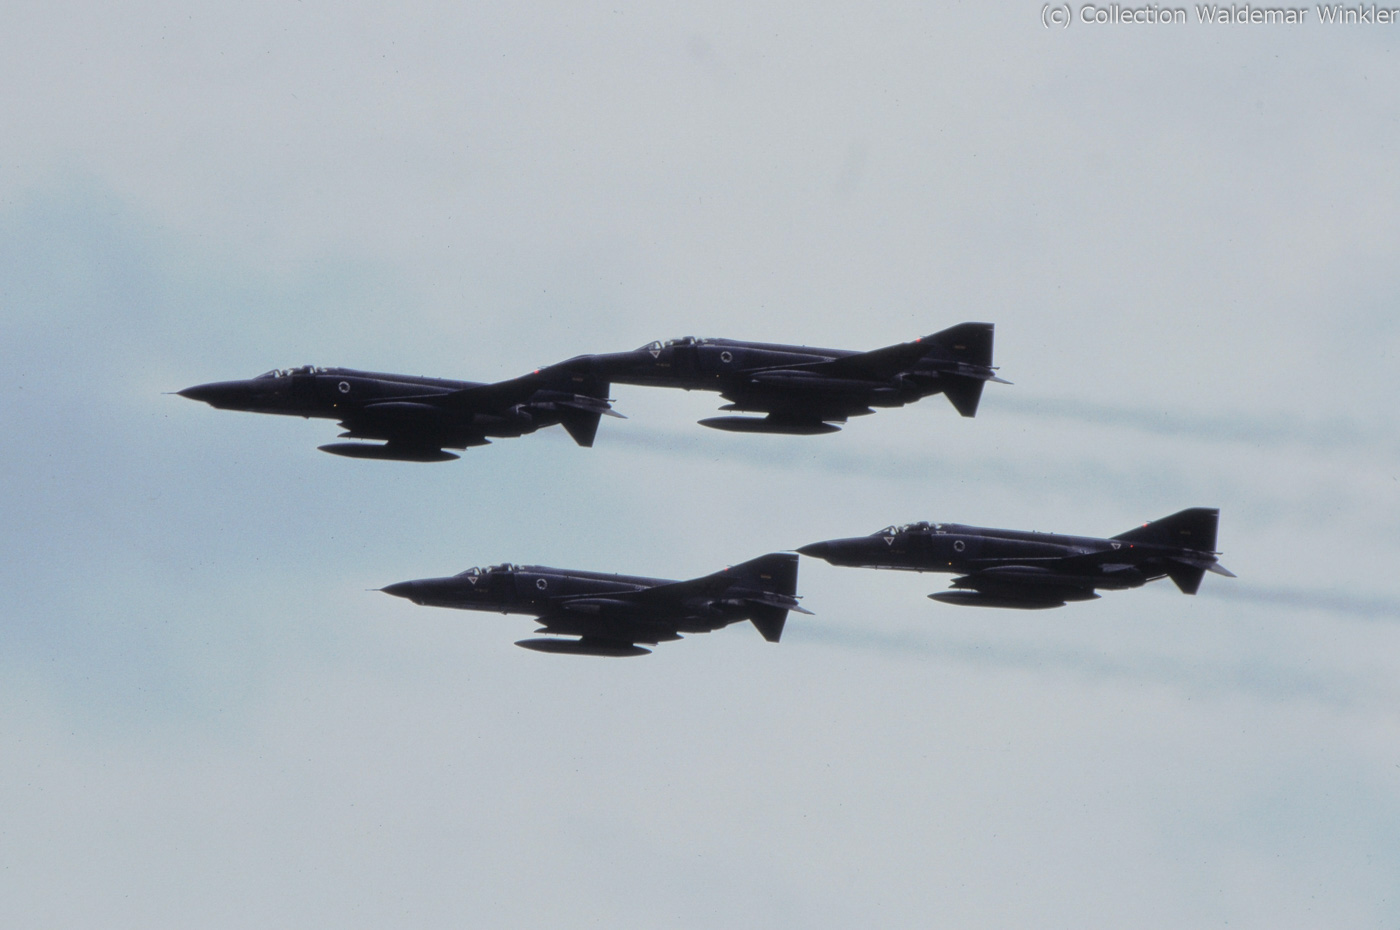 F-4_Phantom_II_DSC_1209.jpg